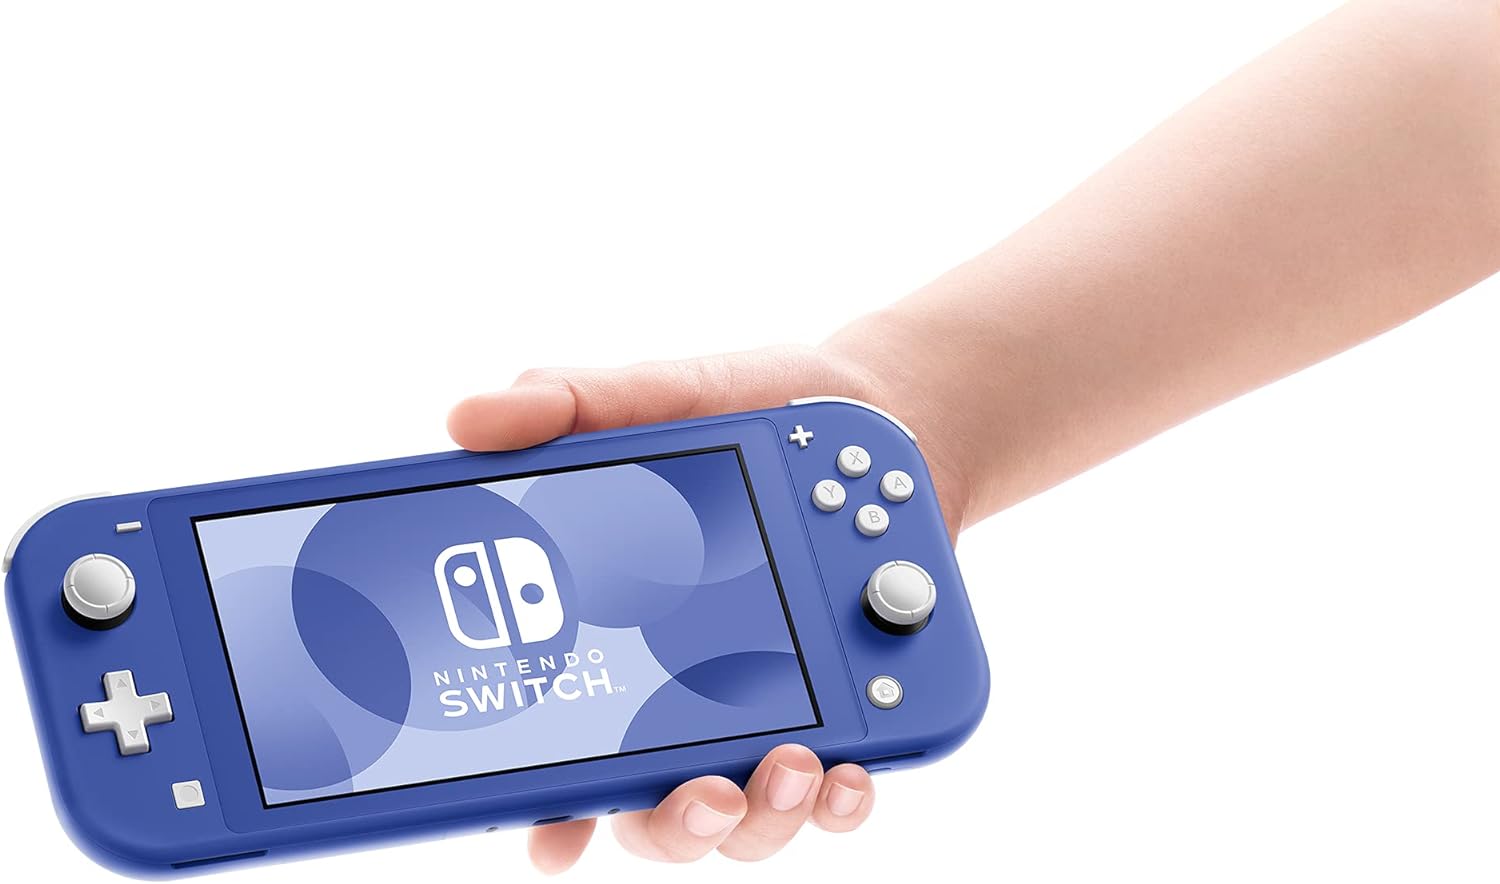 Nintendo Switch Lite - 32GB - Blue (New)